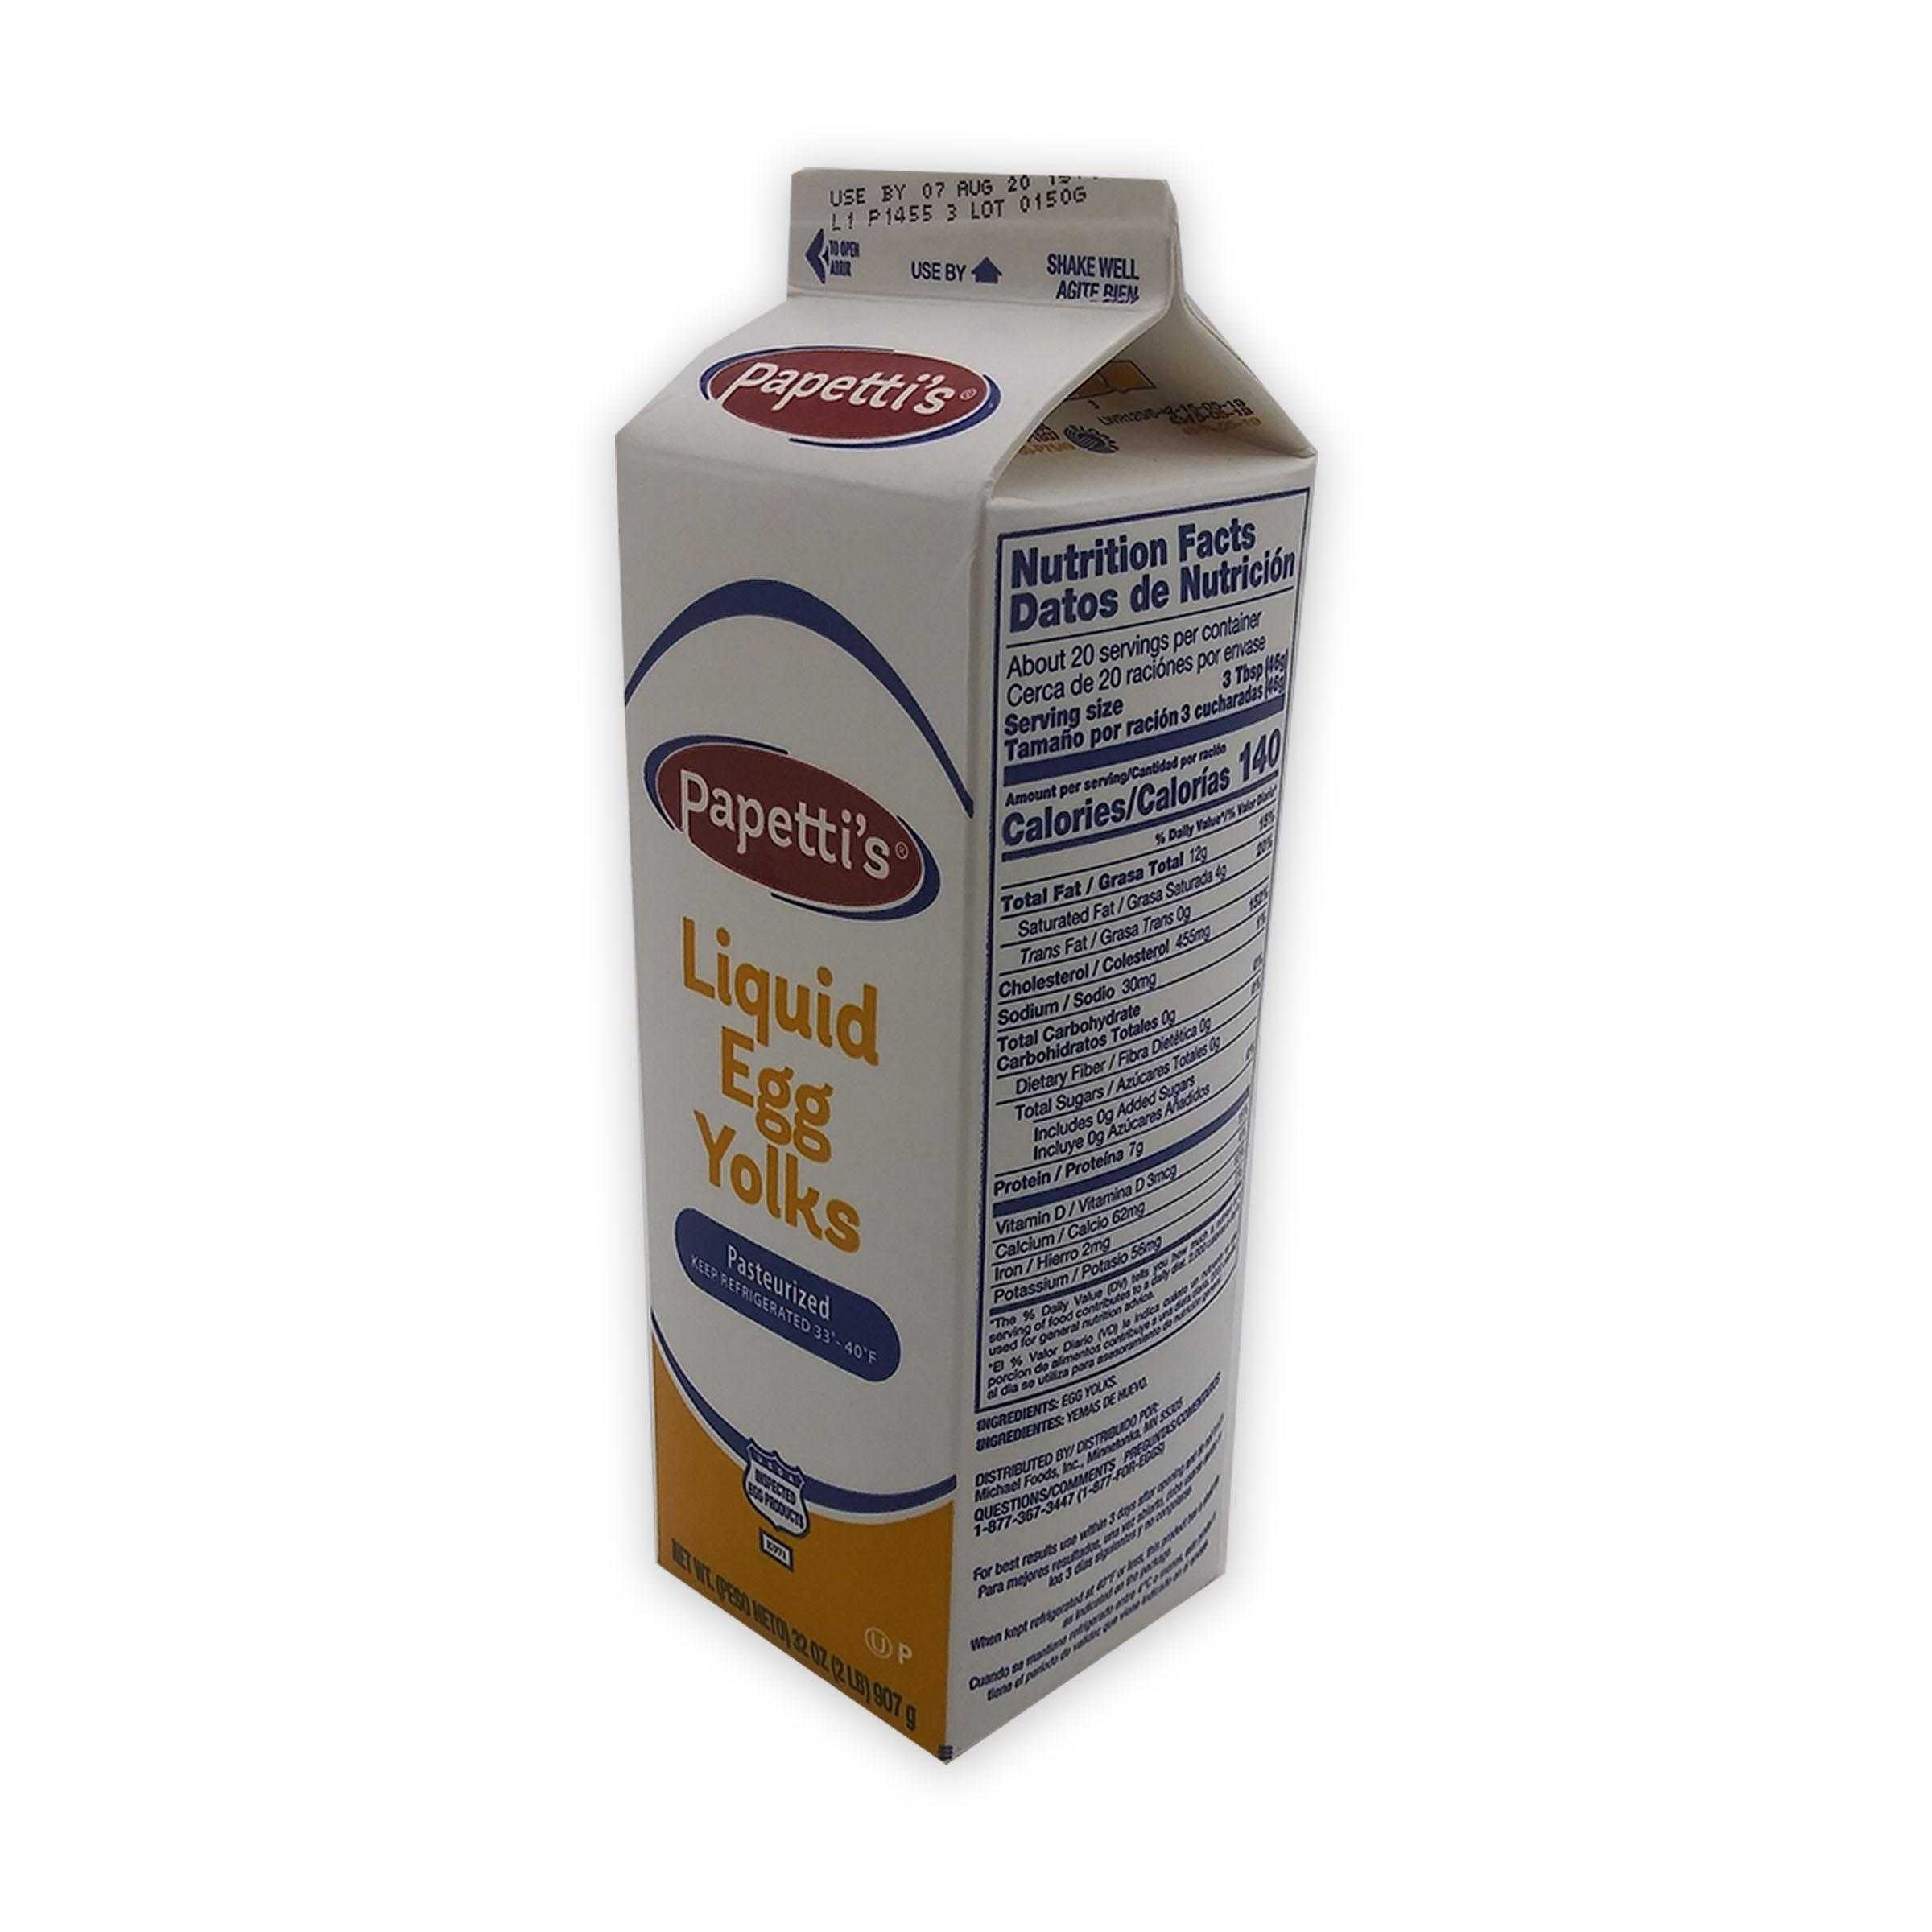 Papetti’s® Refrigerated Liquid Egg Yolks, 15/2 Lb Cartons